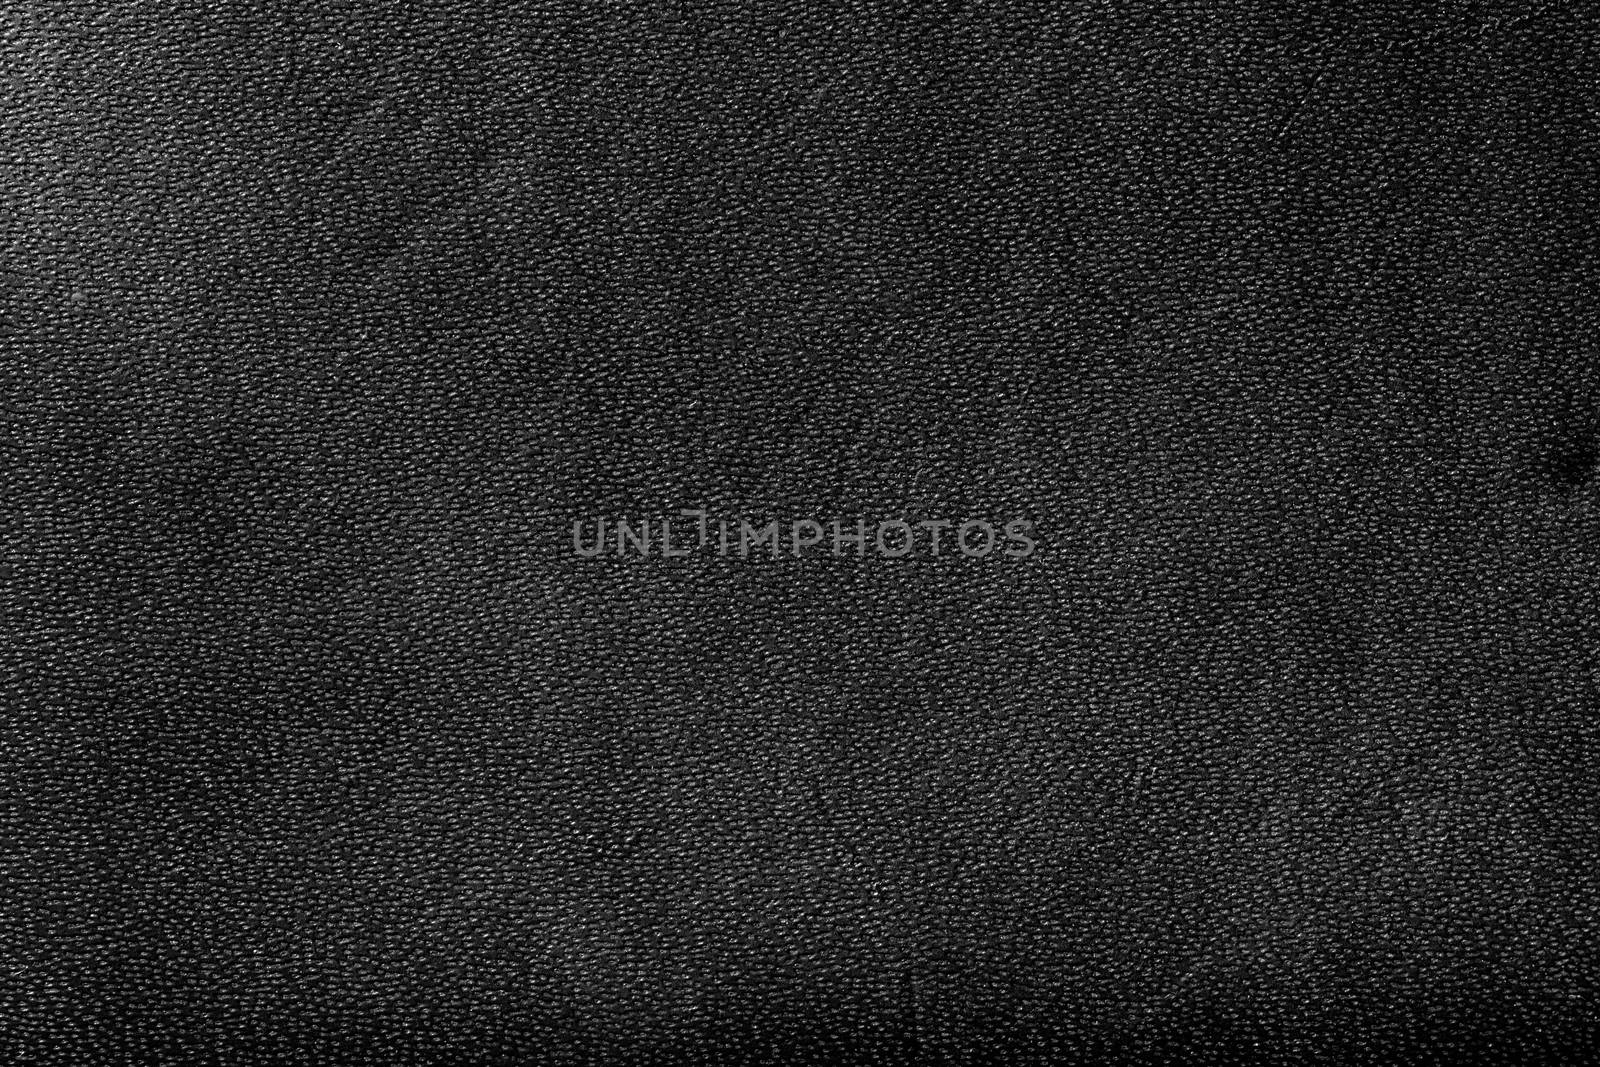 Genuine black leather background, pattern. High resolution.